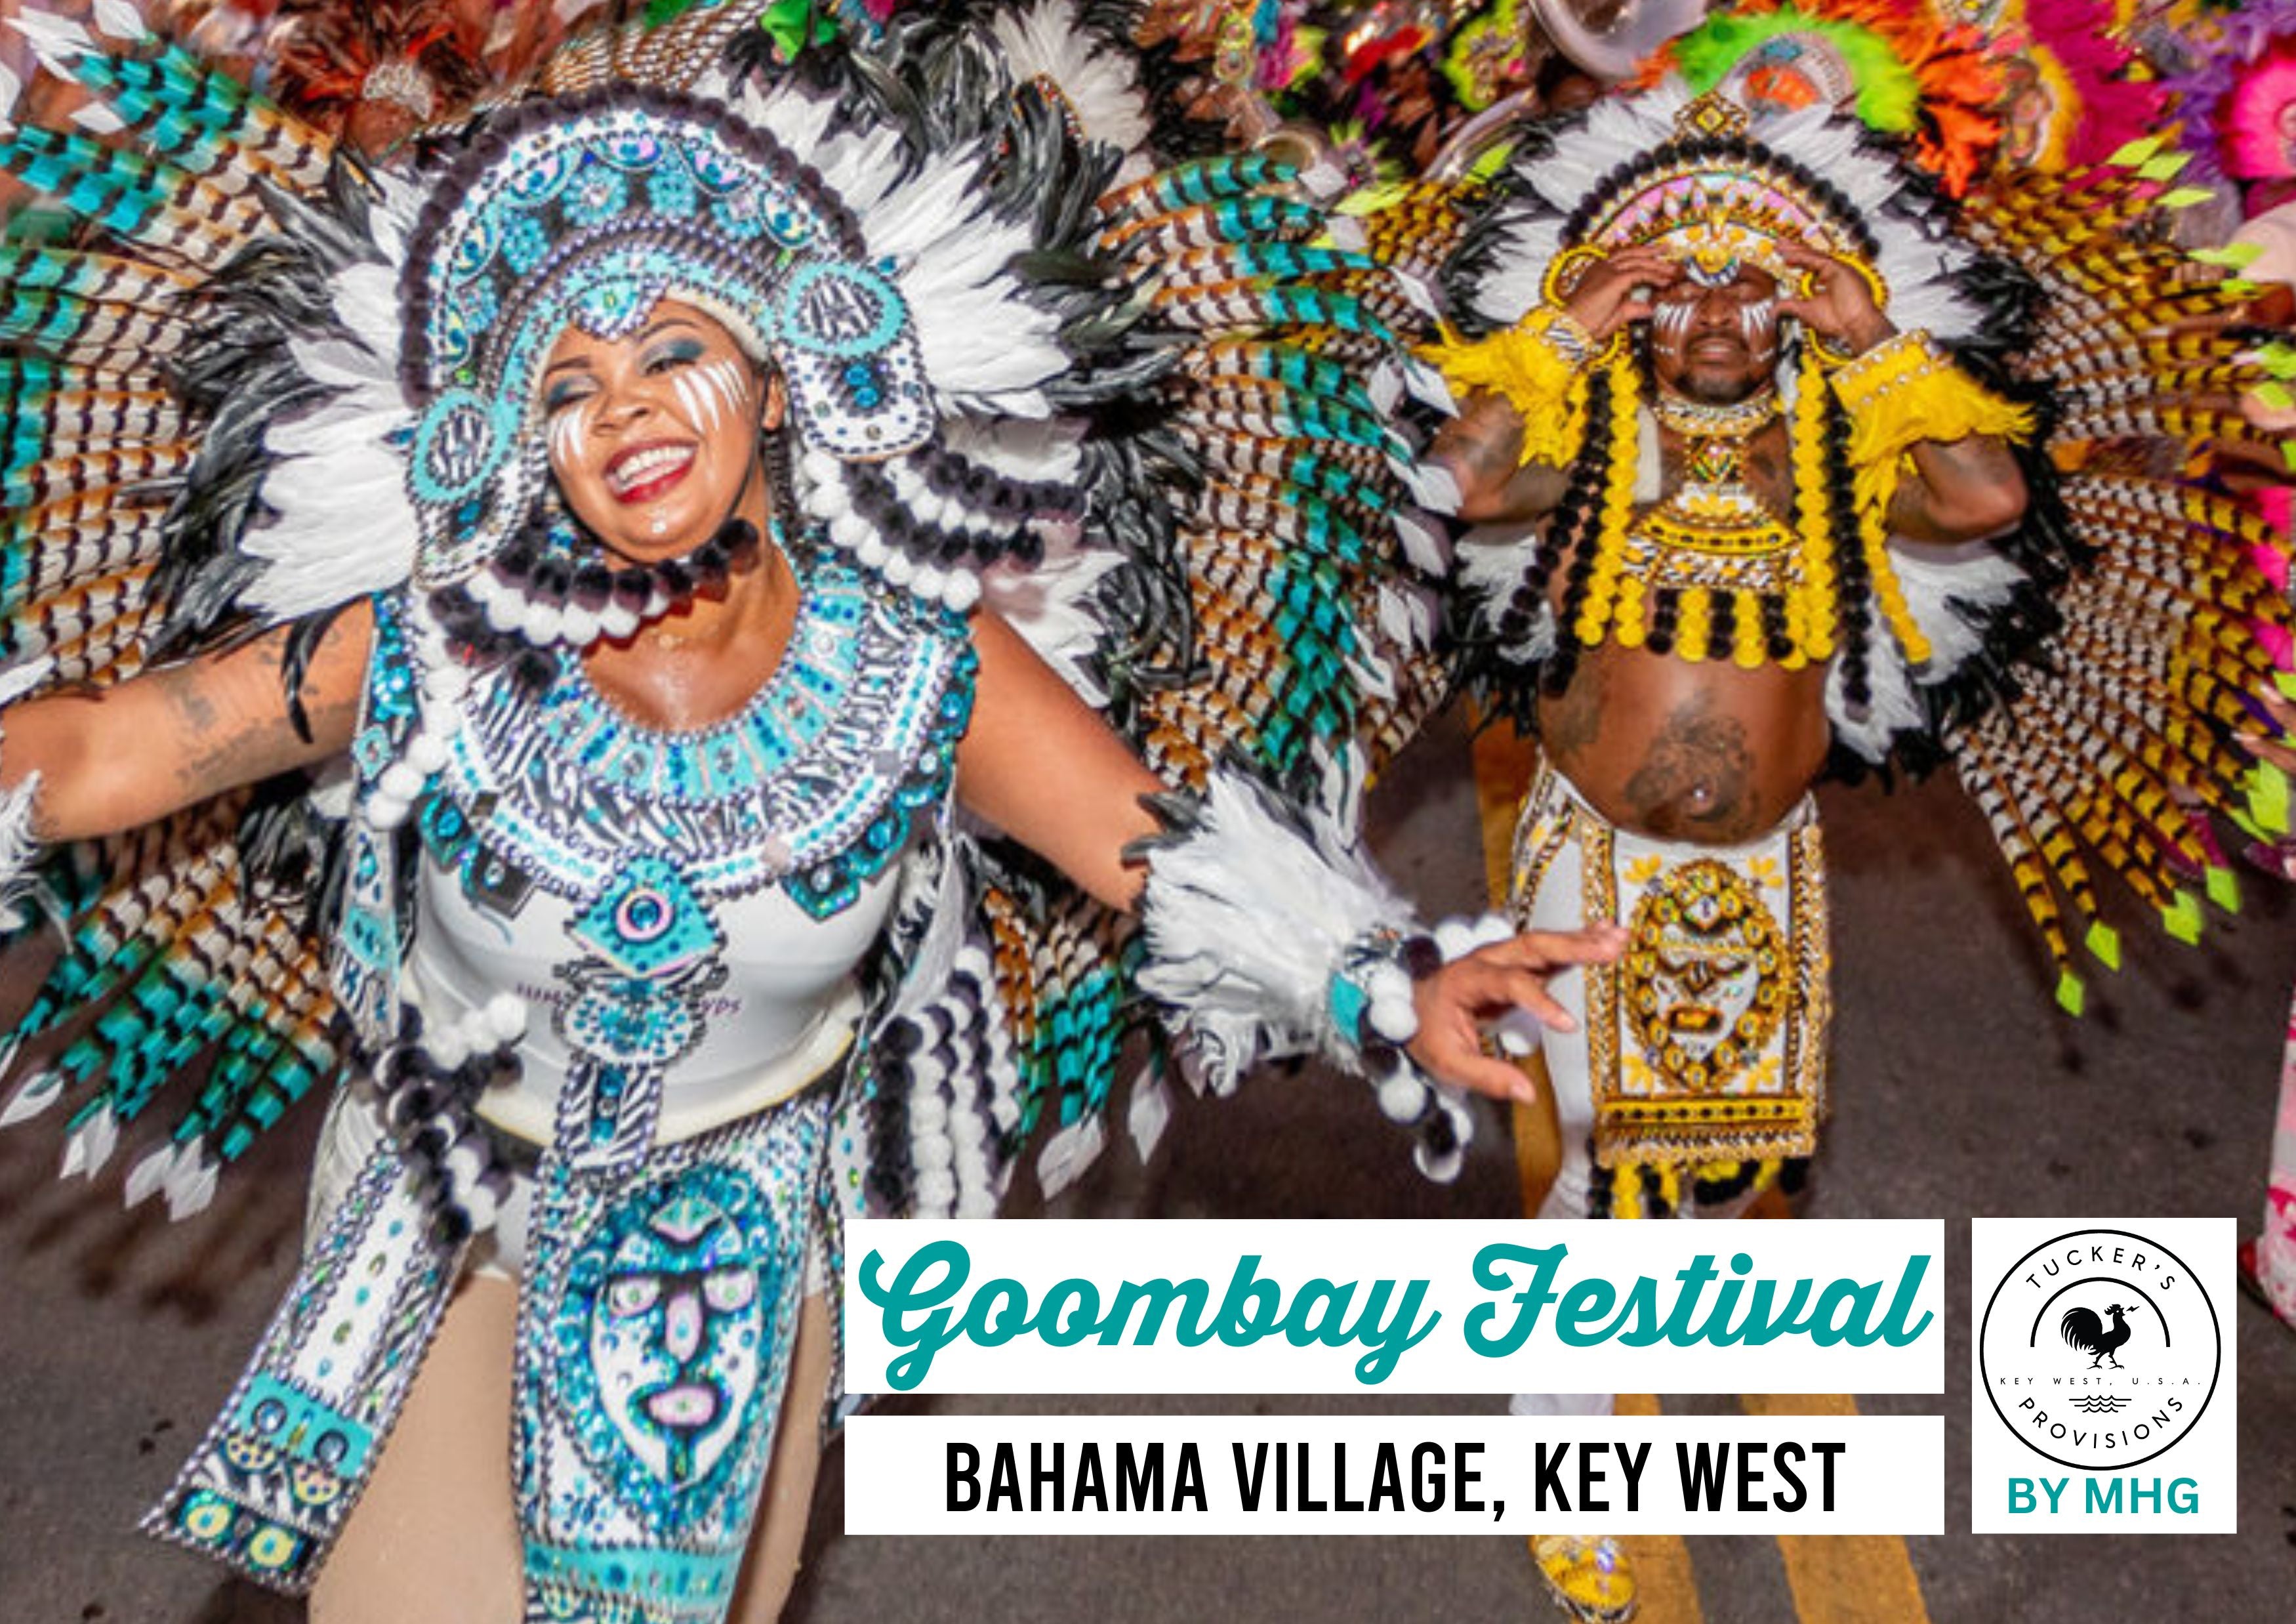 GOOMBAY FESTIVAL - Bahama Village, Key West